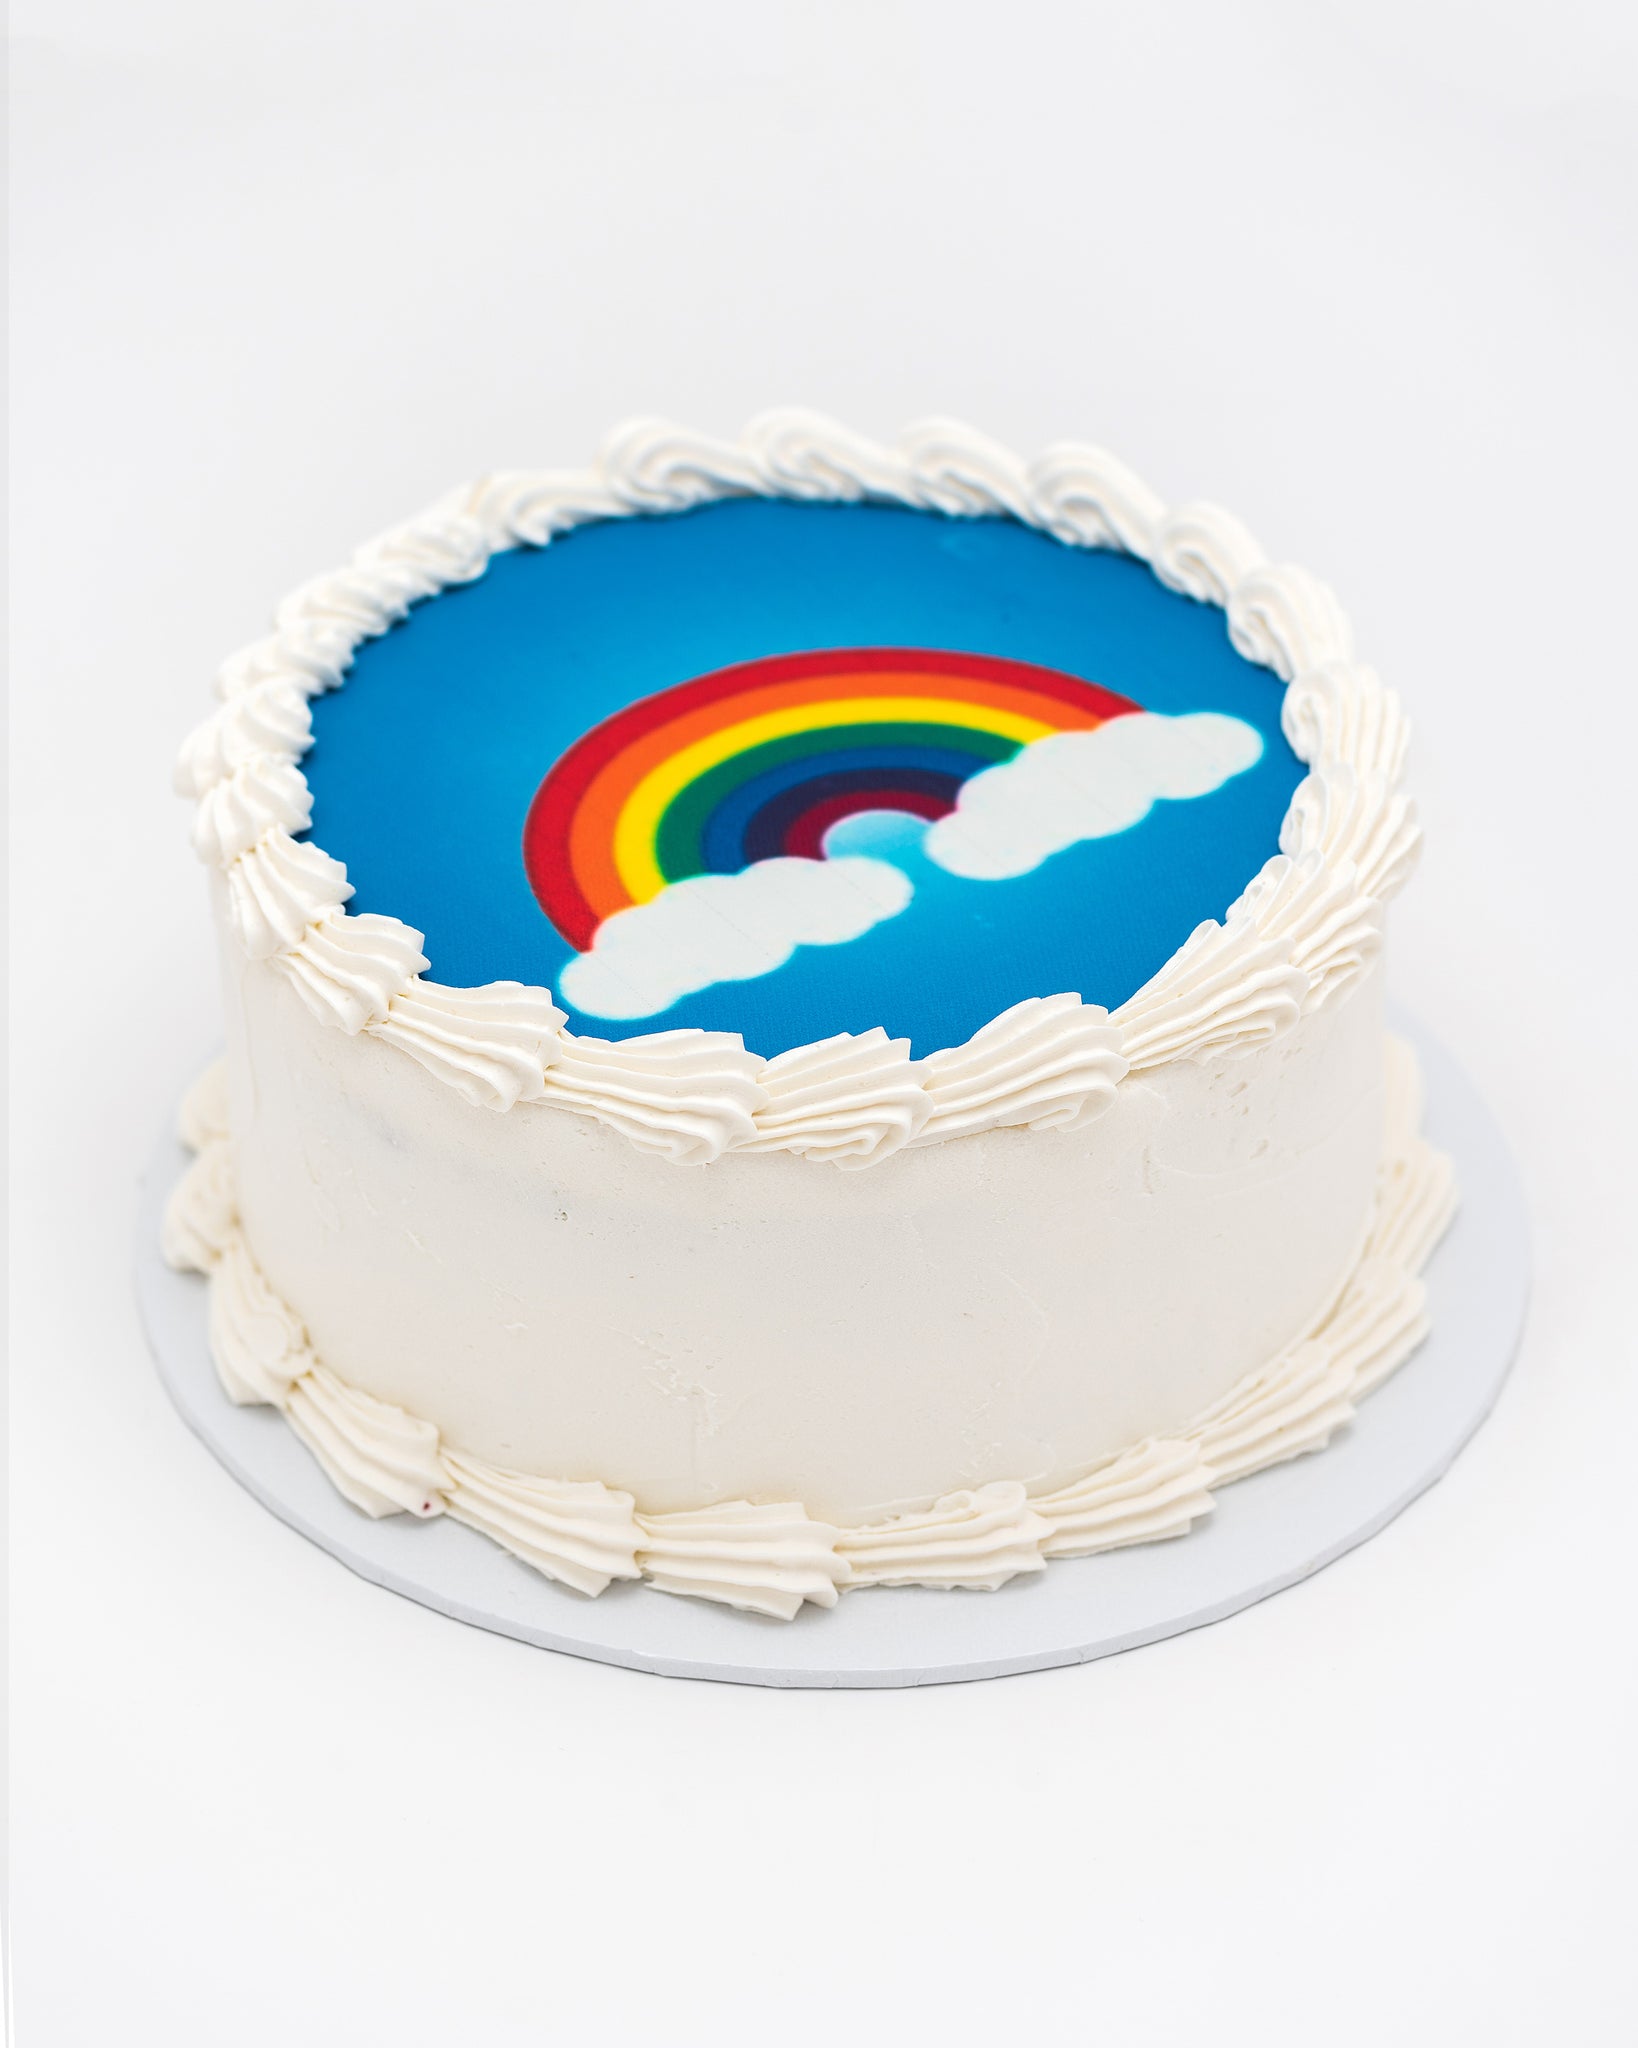 Stunning edible wrap cake | Edible images, Cake, Pretty cakes